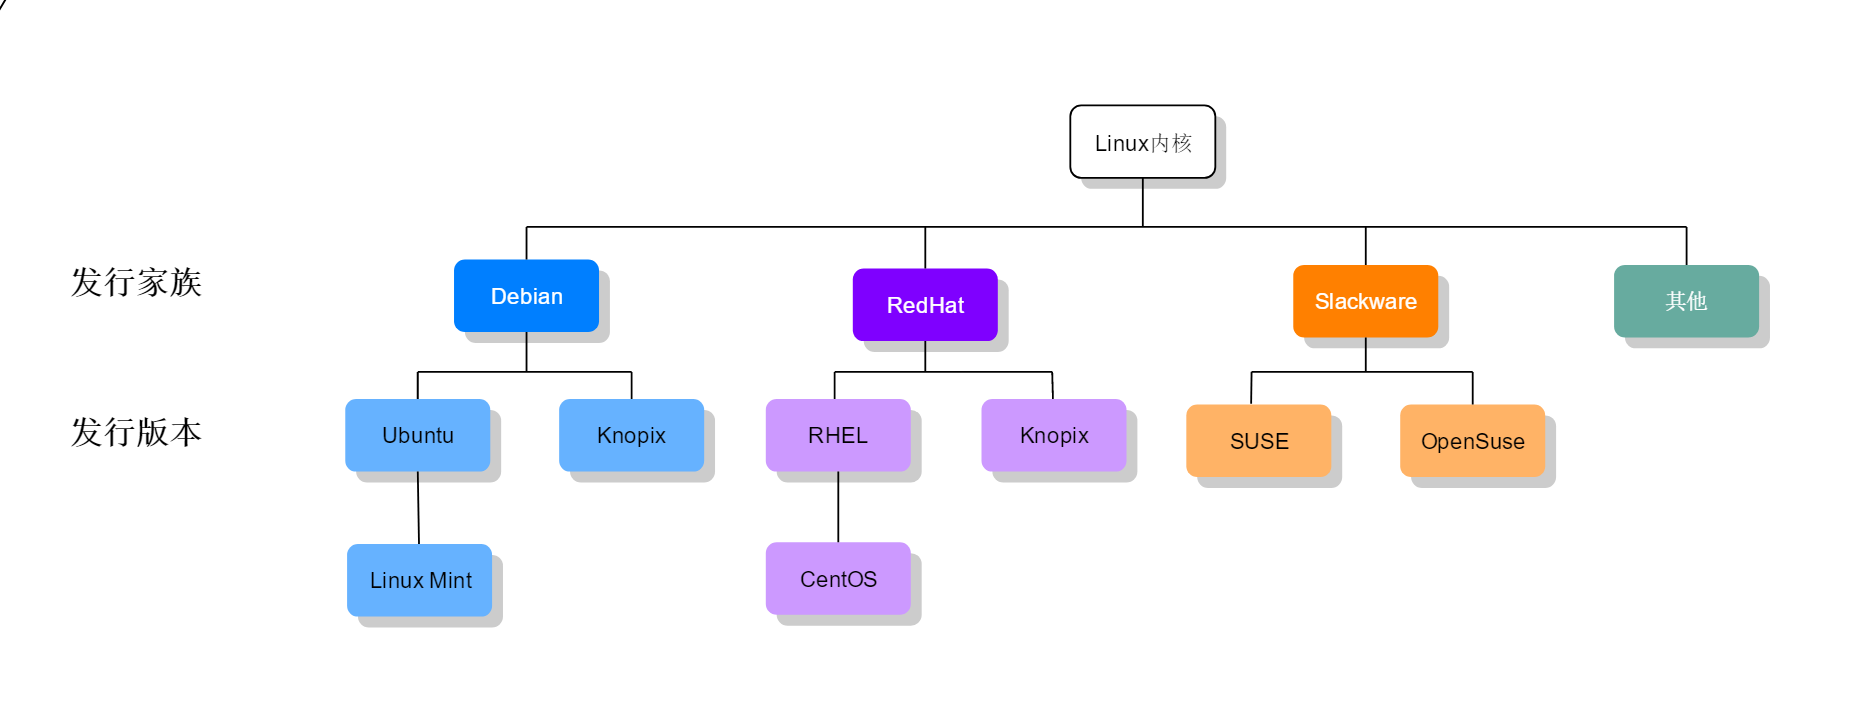 android是开源的吗_linux系统那个好